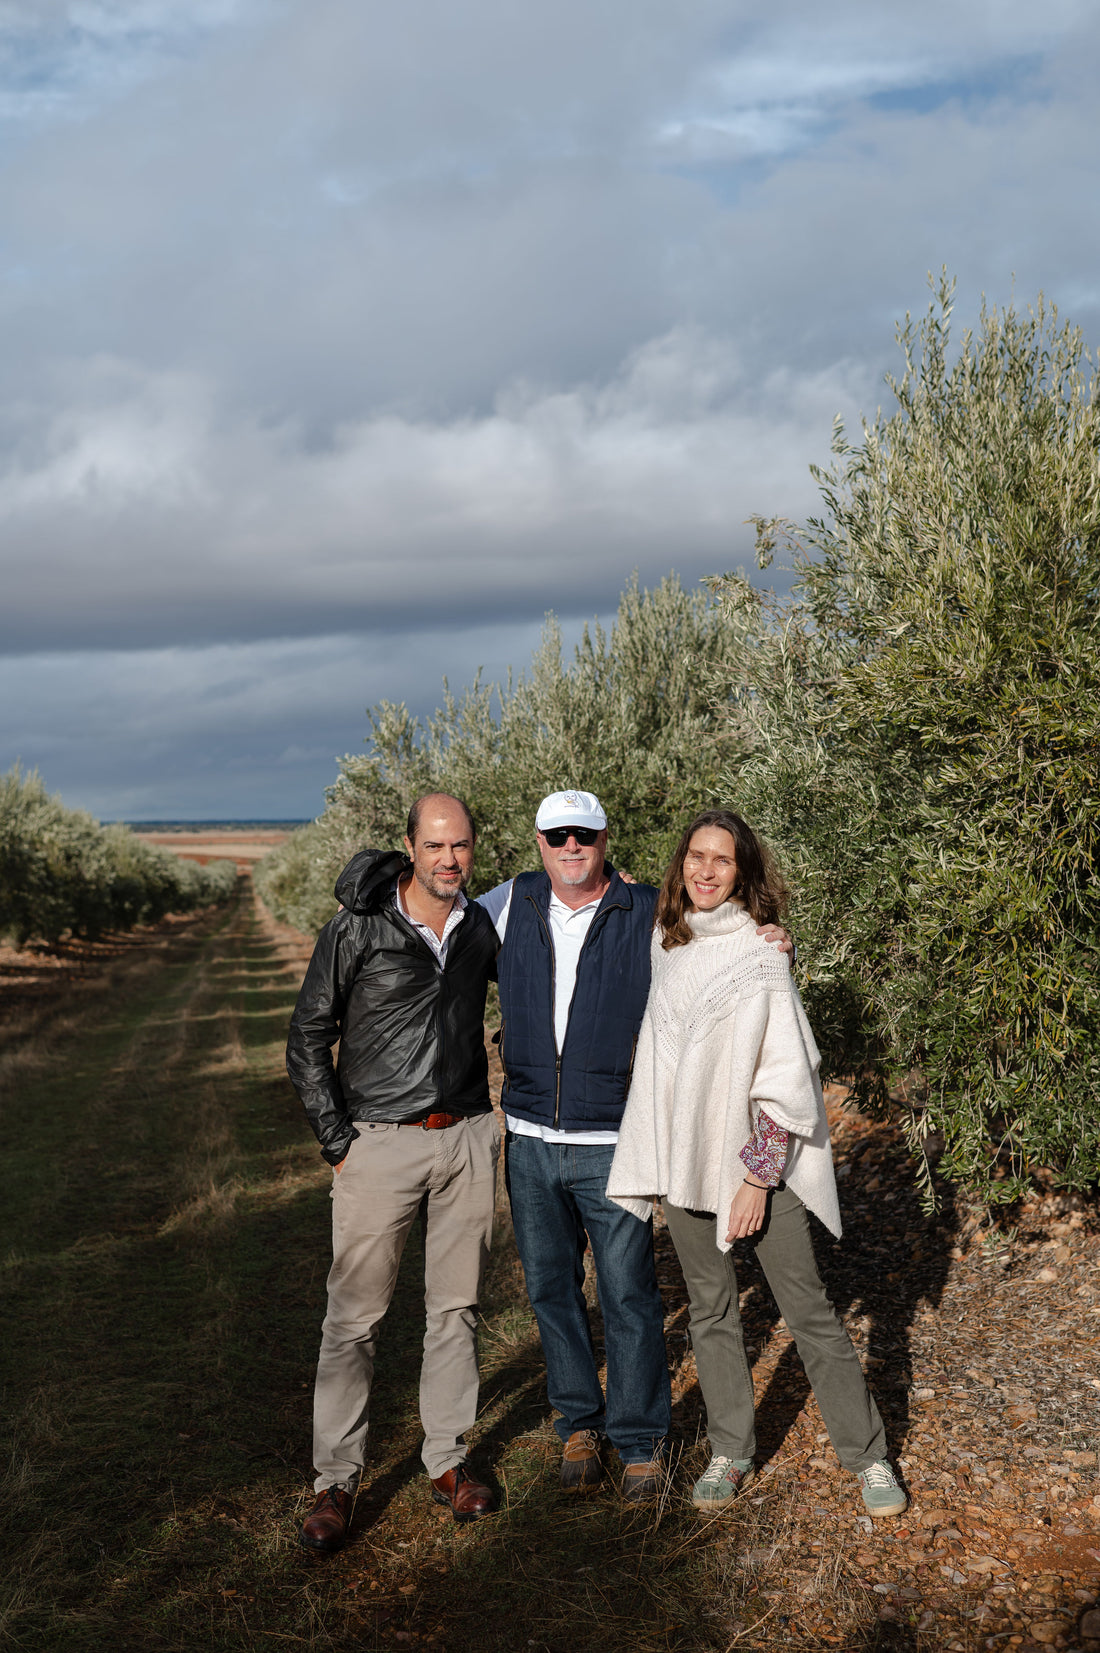 A EVOOGuy.com(R) 2023/2024 Harvest Semone Extra Virgin Olive Oil- Premium- 100% Spanish Picual - 1 bottle (500ml)